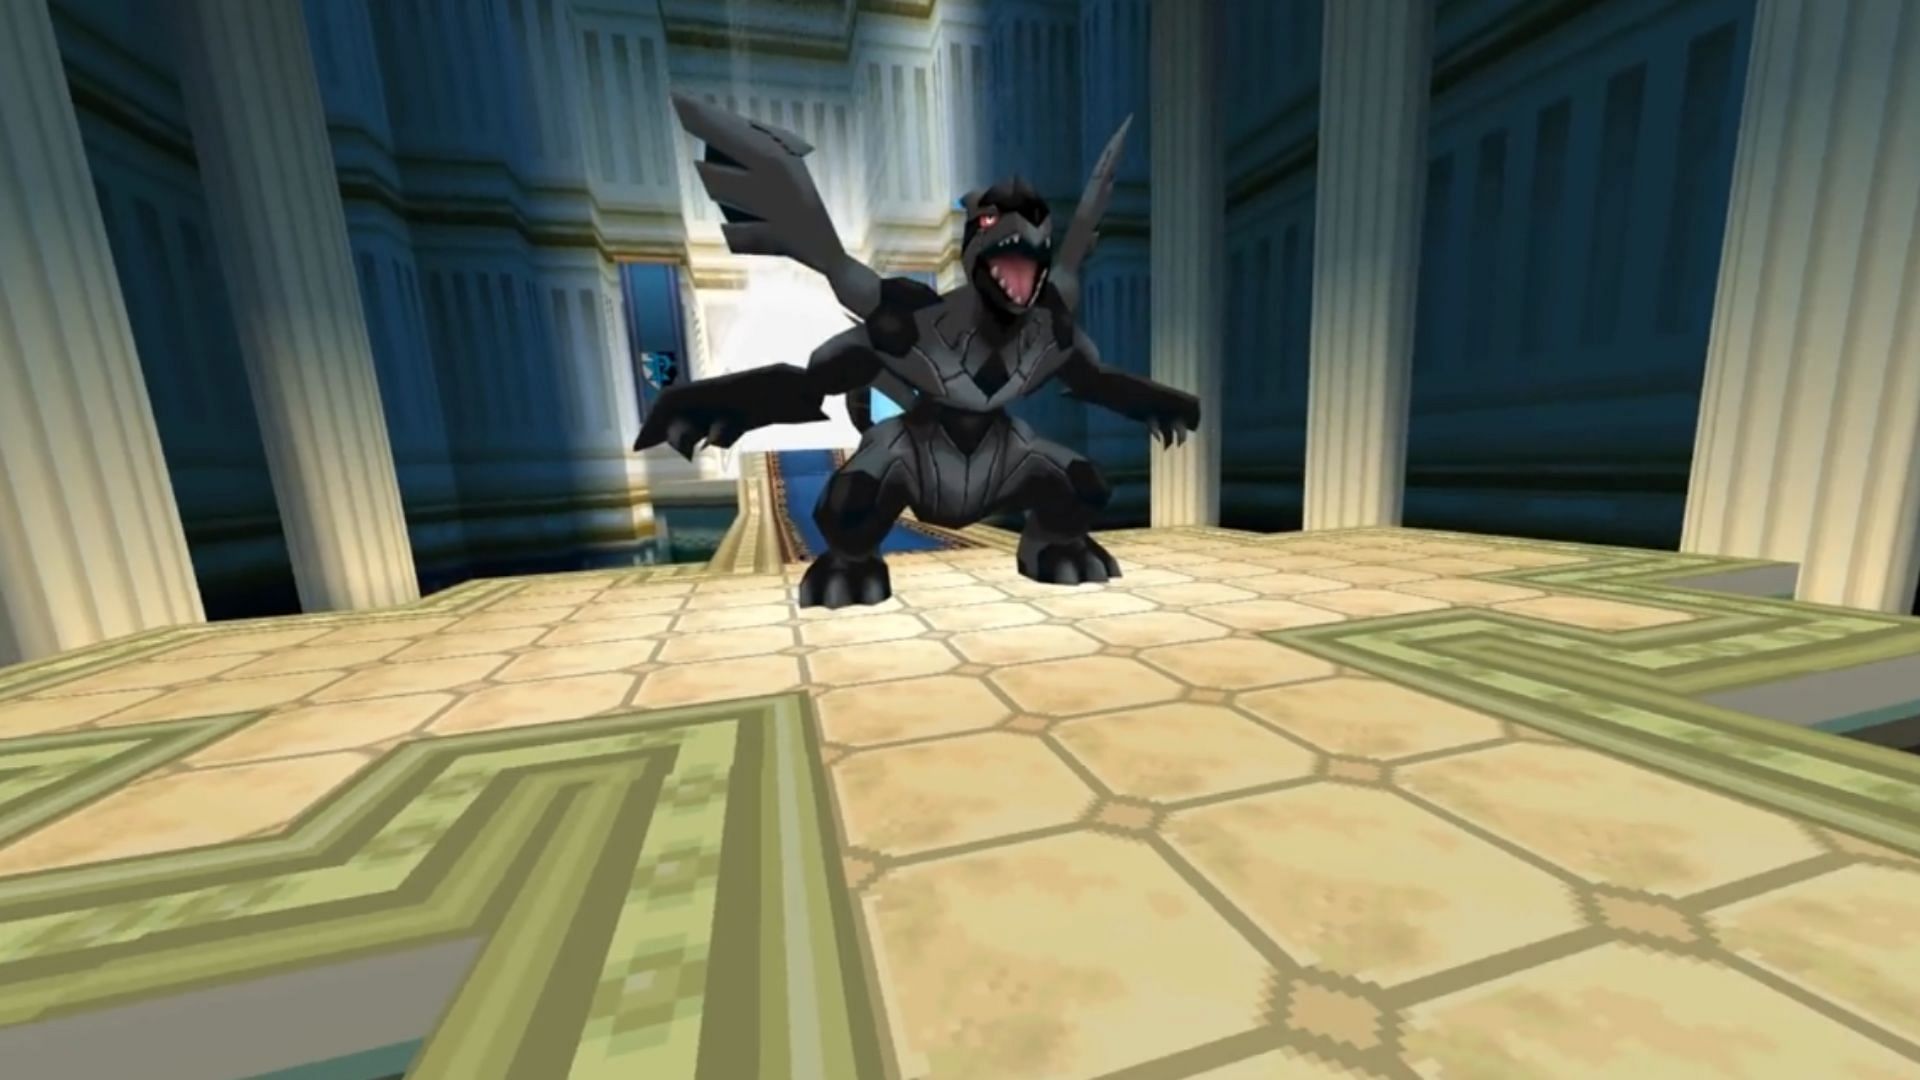 The game notably leads to encountering Legendary Pokemon (Image via PokeMMO)